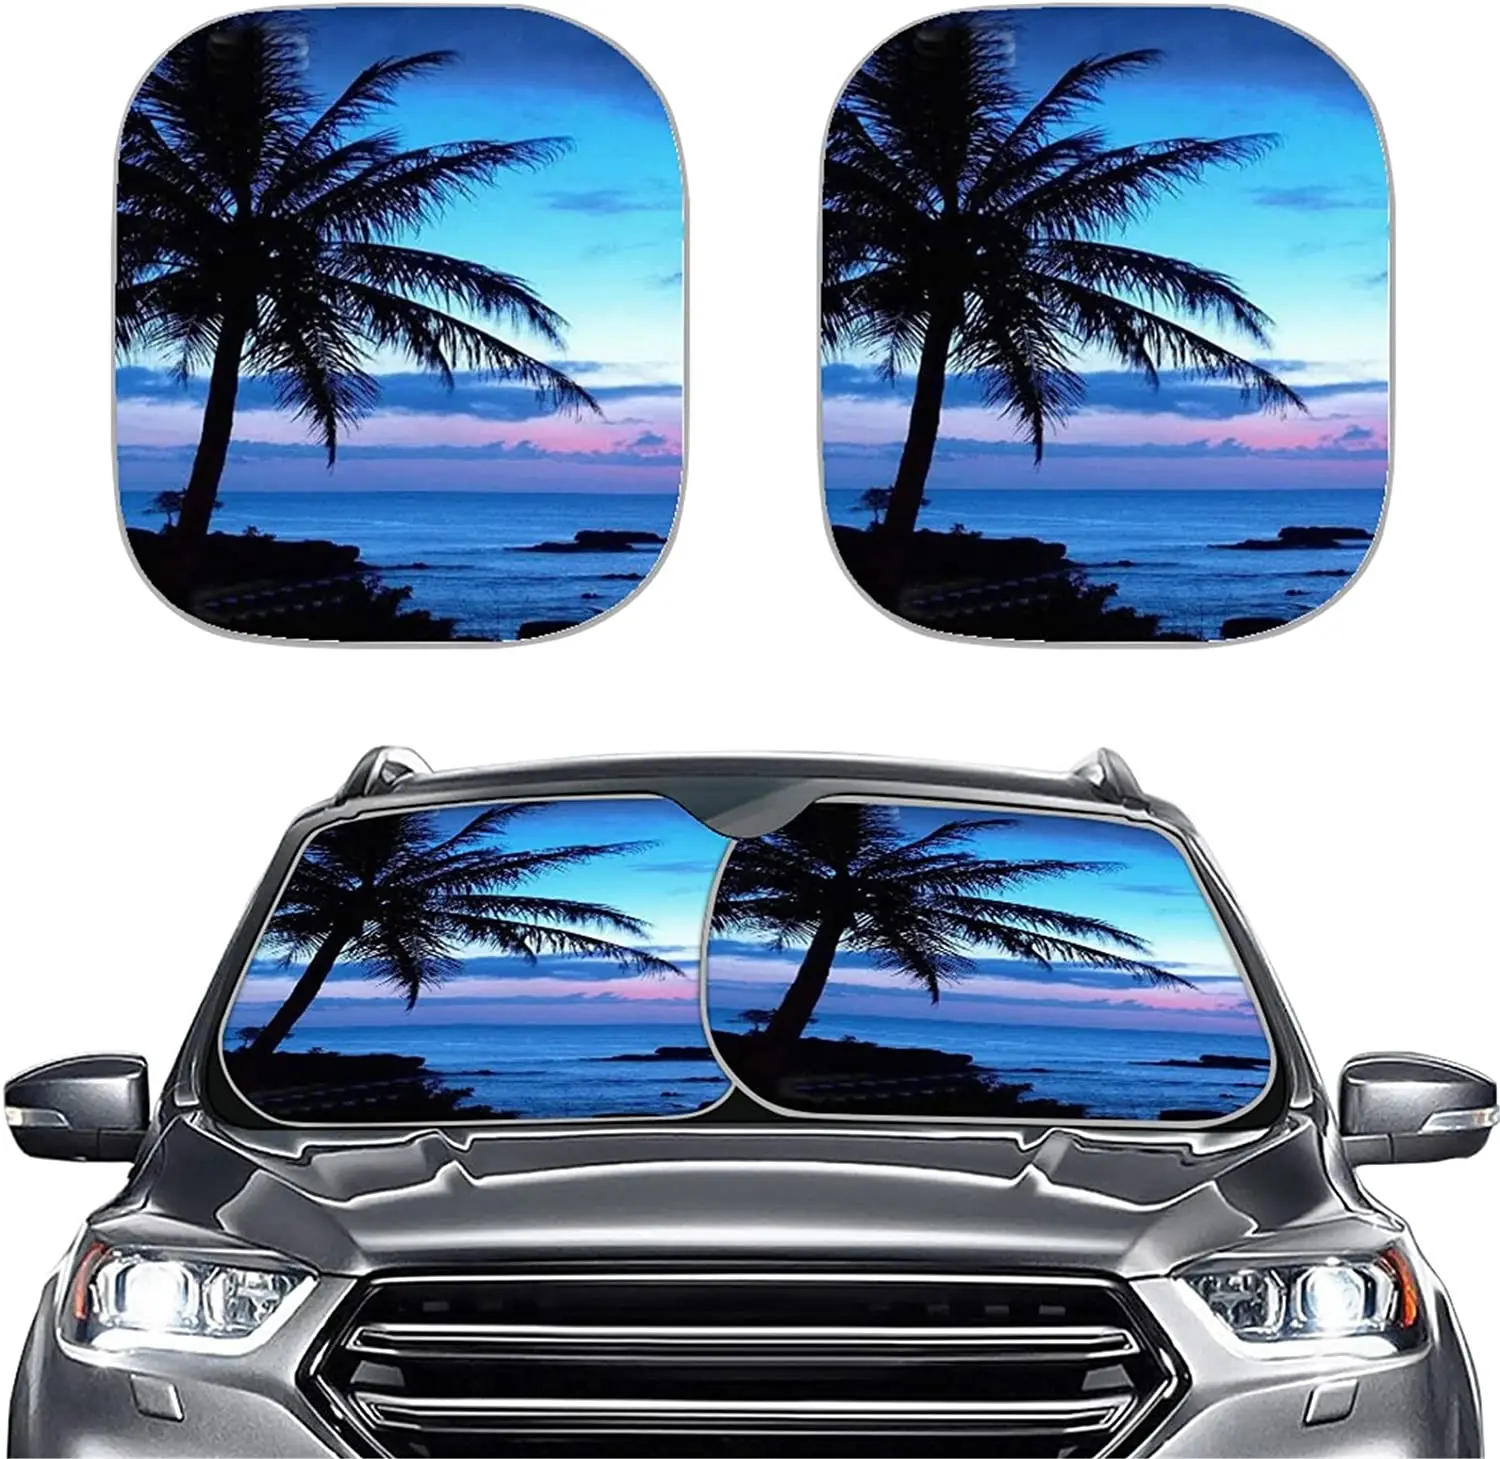 

COEQINE Tropical Paradise Ocean Beach Scene with Palm Trees Print Front Car Sunshade Windshield Shade,Folding Car Windshield Sun